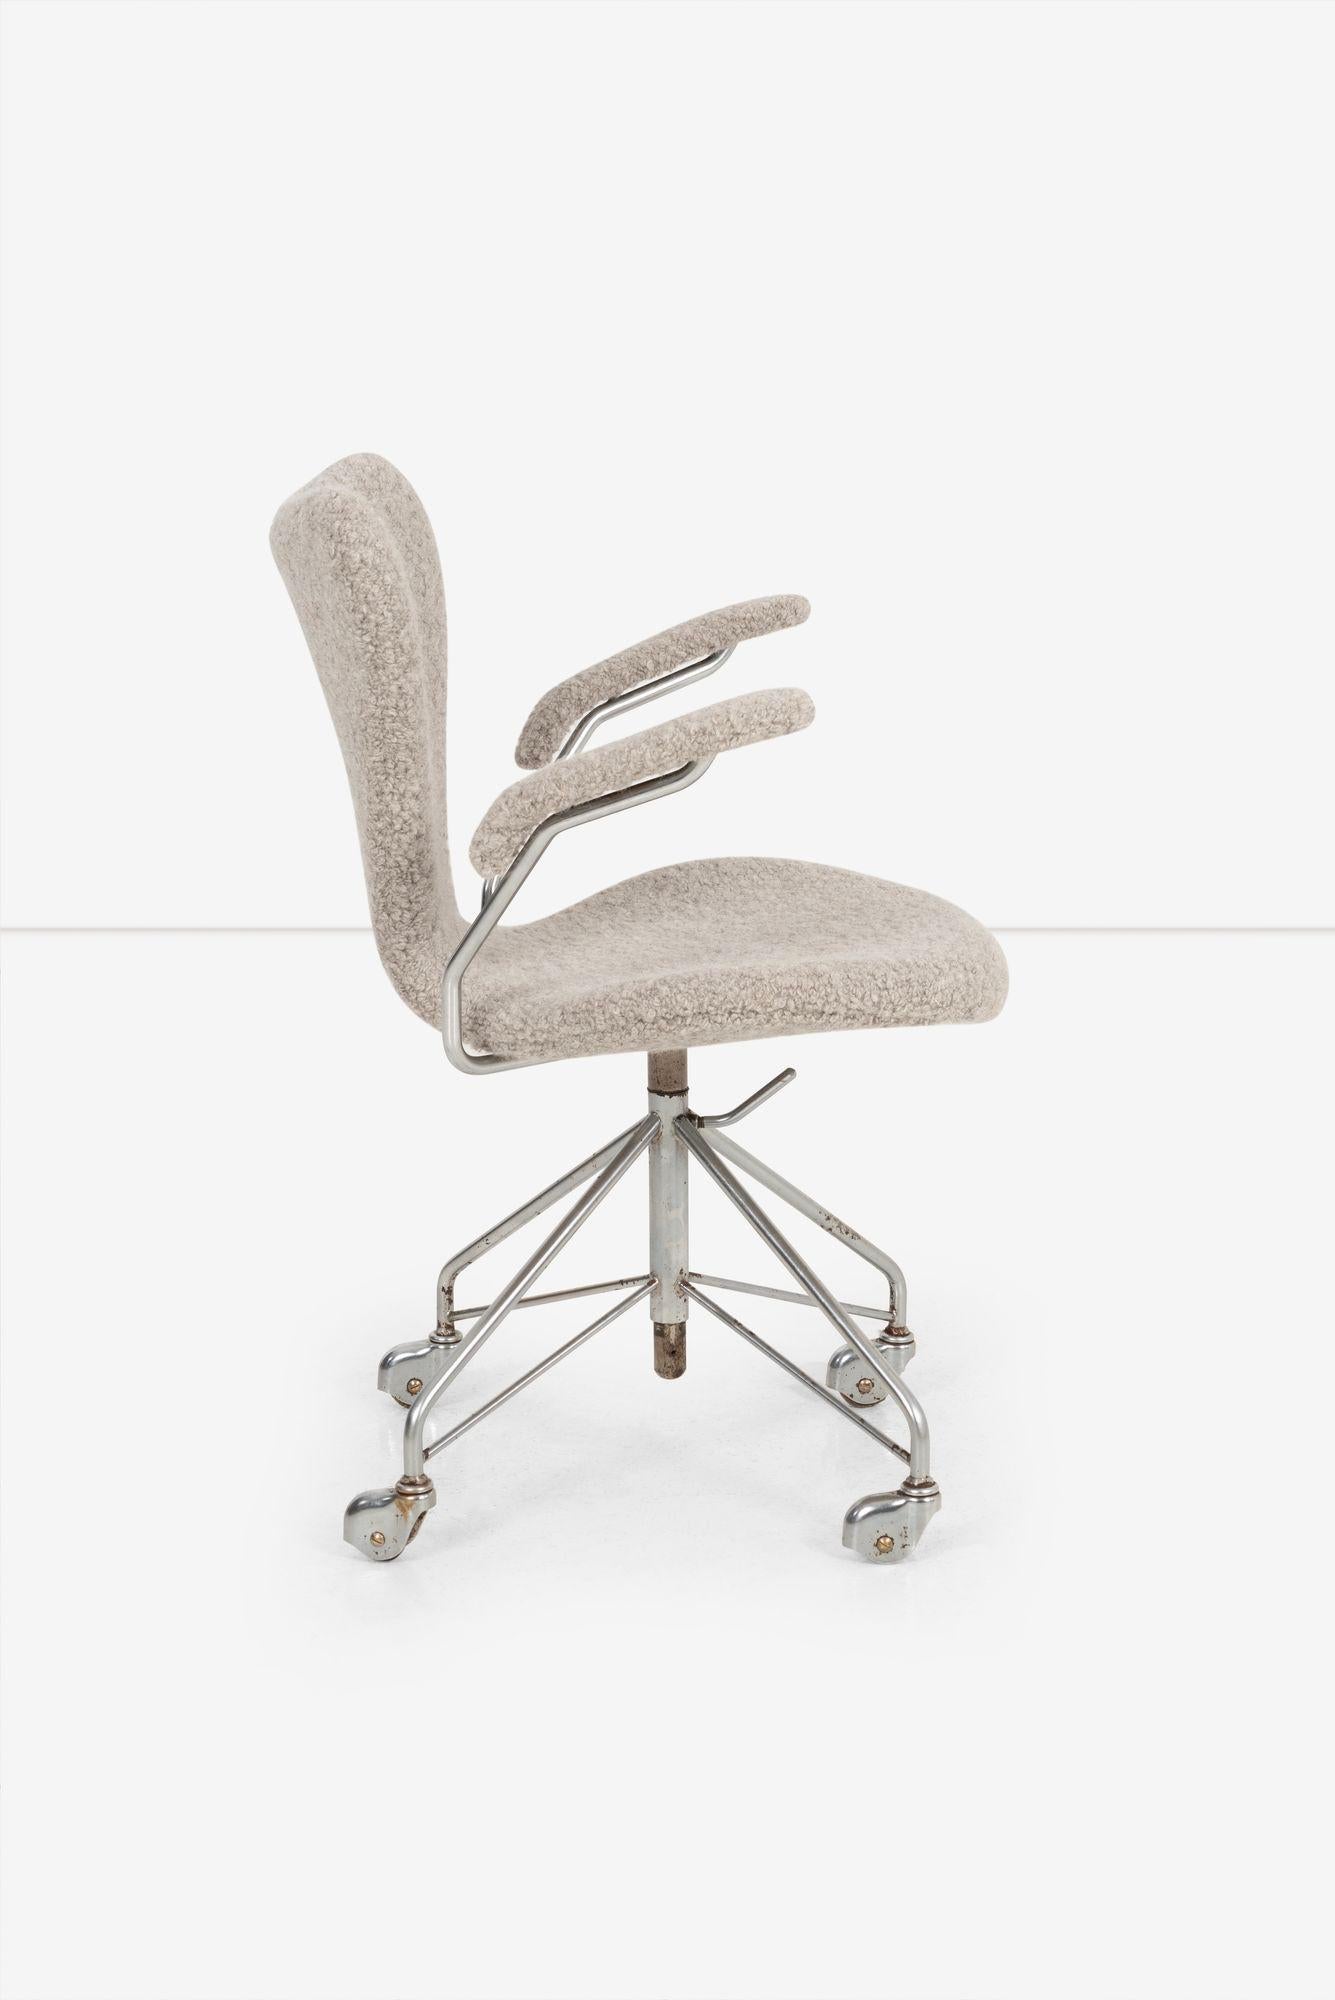 Appliqué Arne Jacobsen Sevener Desk Chair, model 3117 For Sale